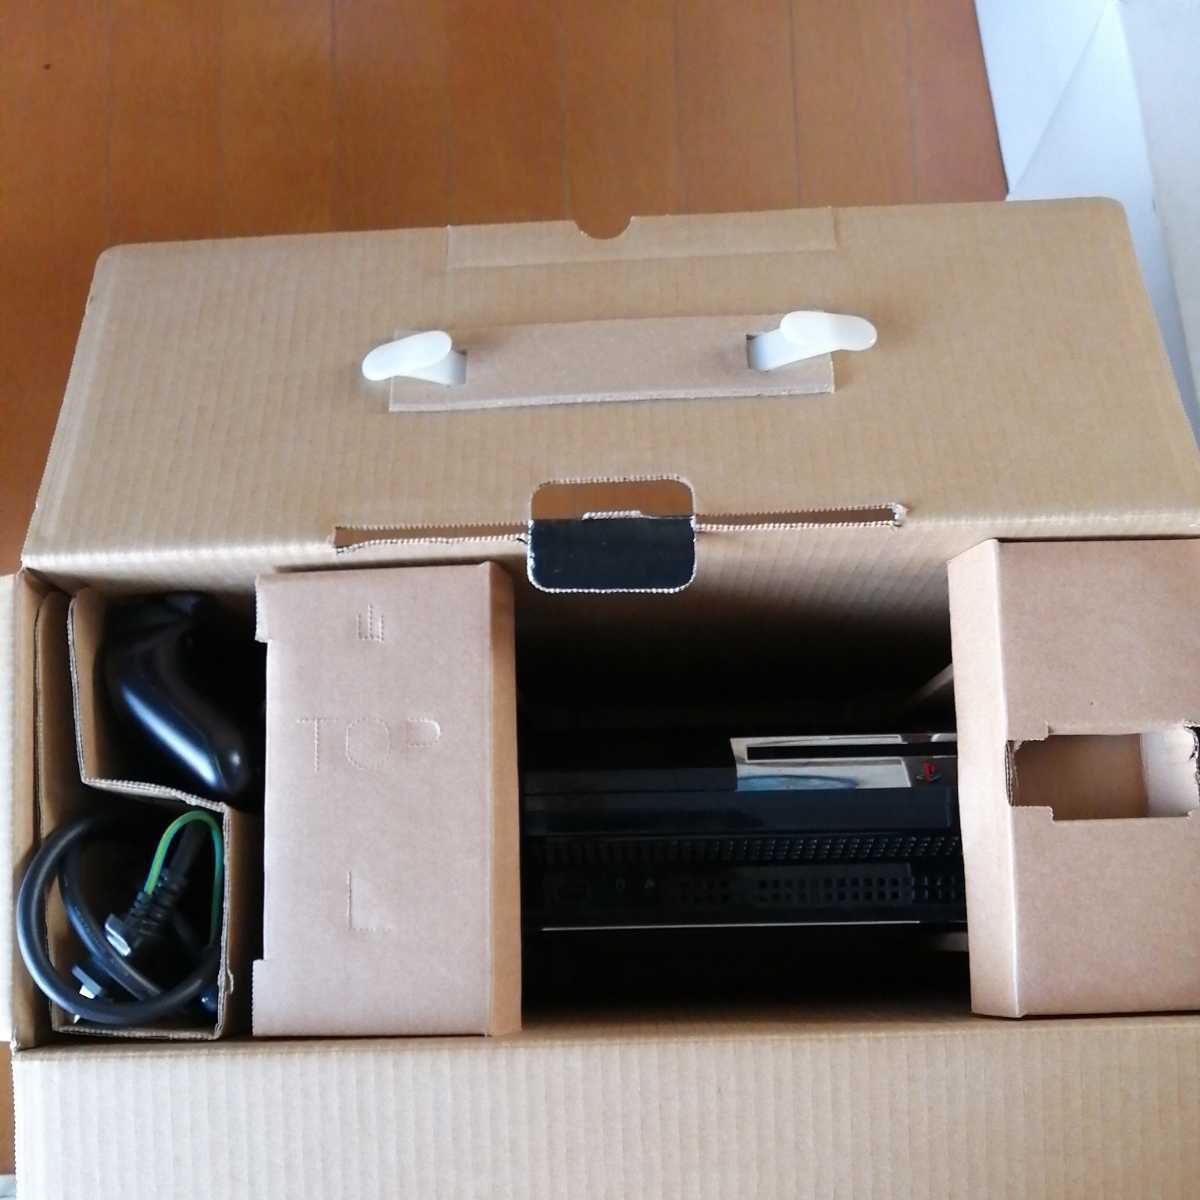 CECHA00 通電確認 PS3 本体 コントローラー美品箱付 厚型 初期型 CECHA00 ブラック プレステ3 PlayStation3 SONY ソニー ランプ正常